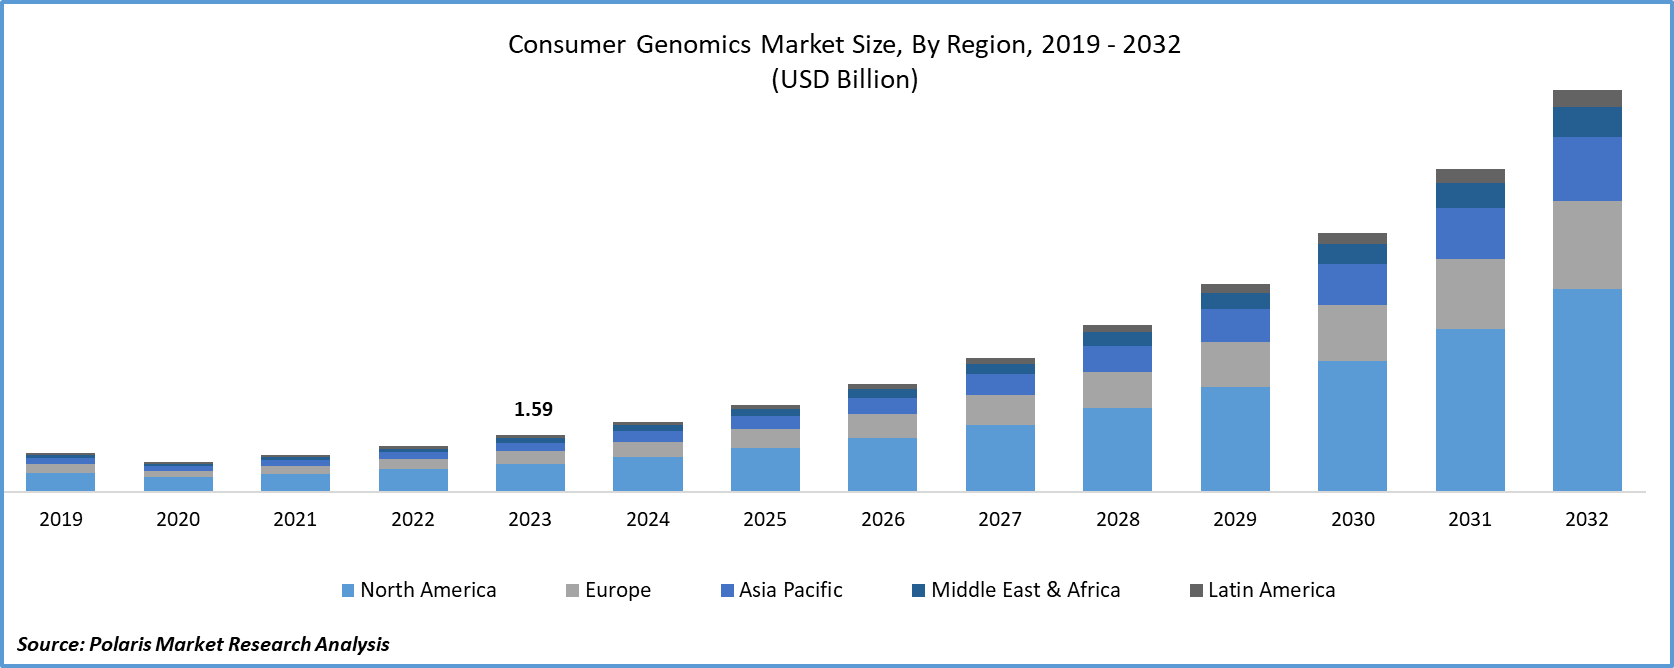 Consumer Genomics Market Size